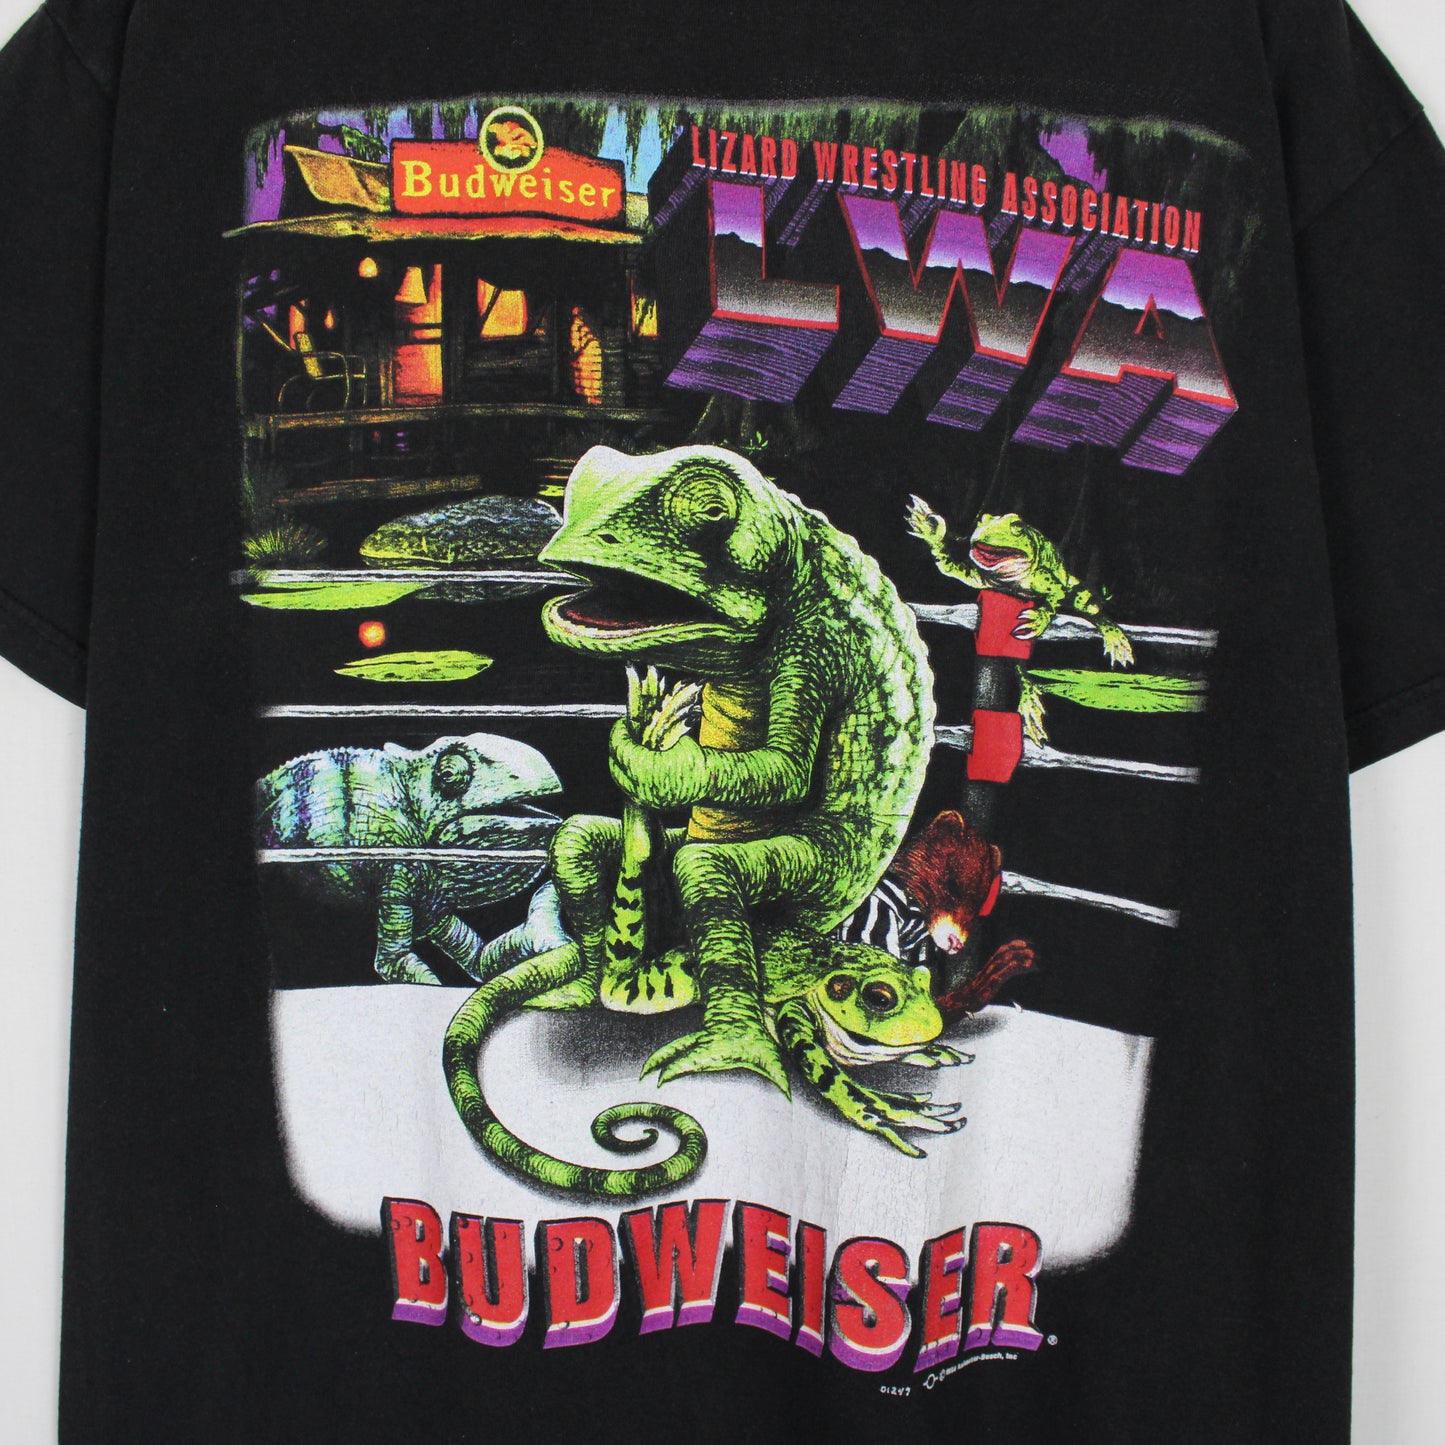 Vintage 1998 Budweiser 'Lizard Wrestling Association' Tee - L